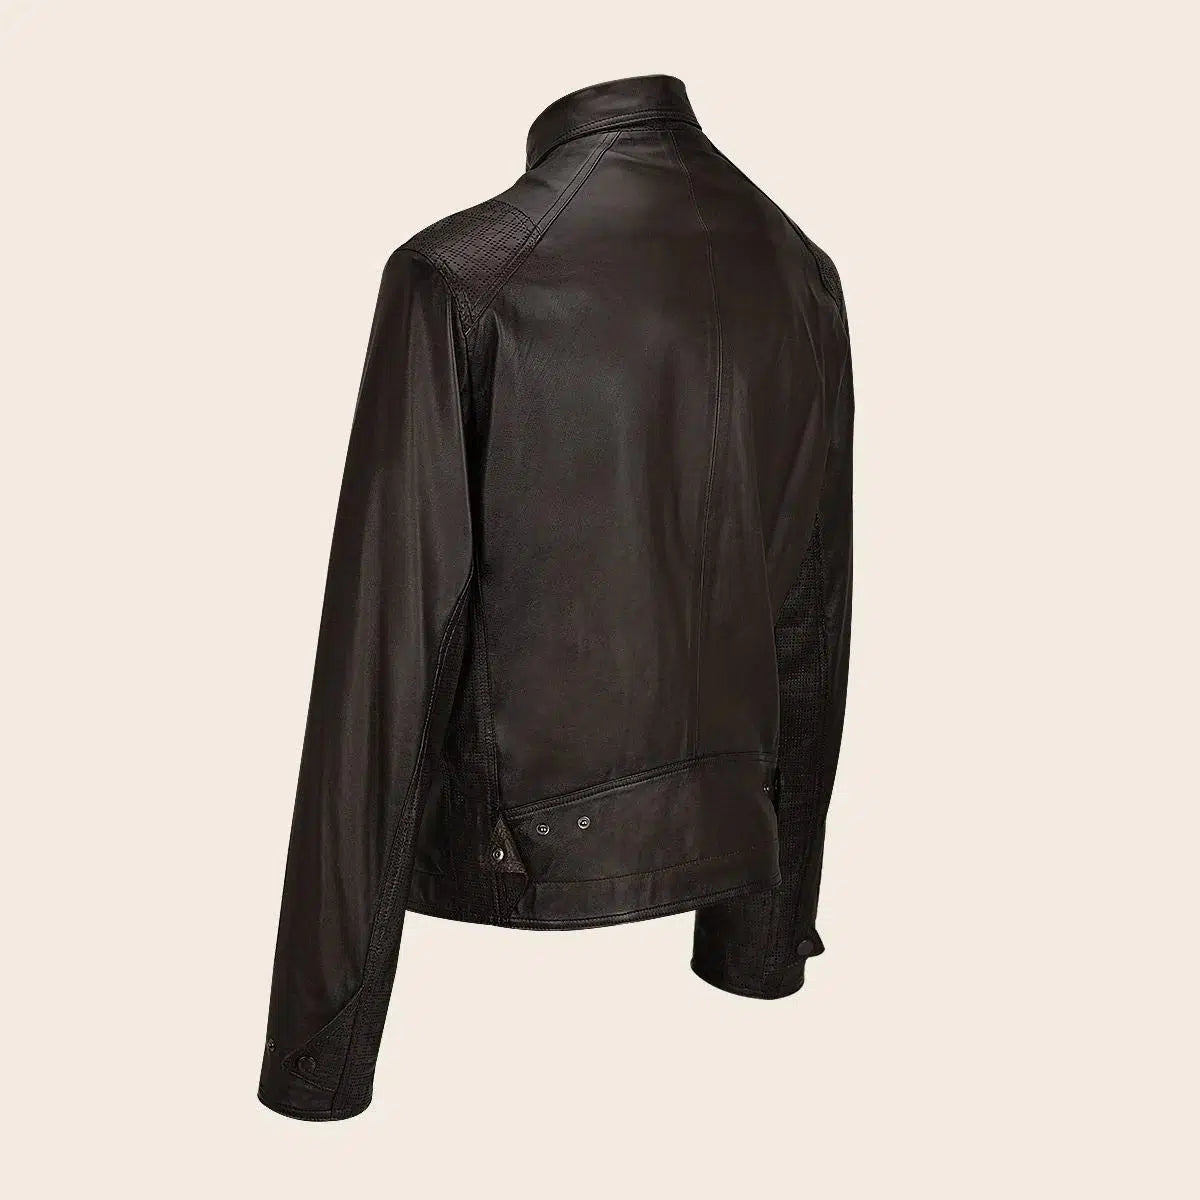 H328COC - Cuadra black dress casual fashion blouson leather jacket for men-Kuet.us - Cuadra Boots - Western Cowboy, Casual Fashion and Dress Boots